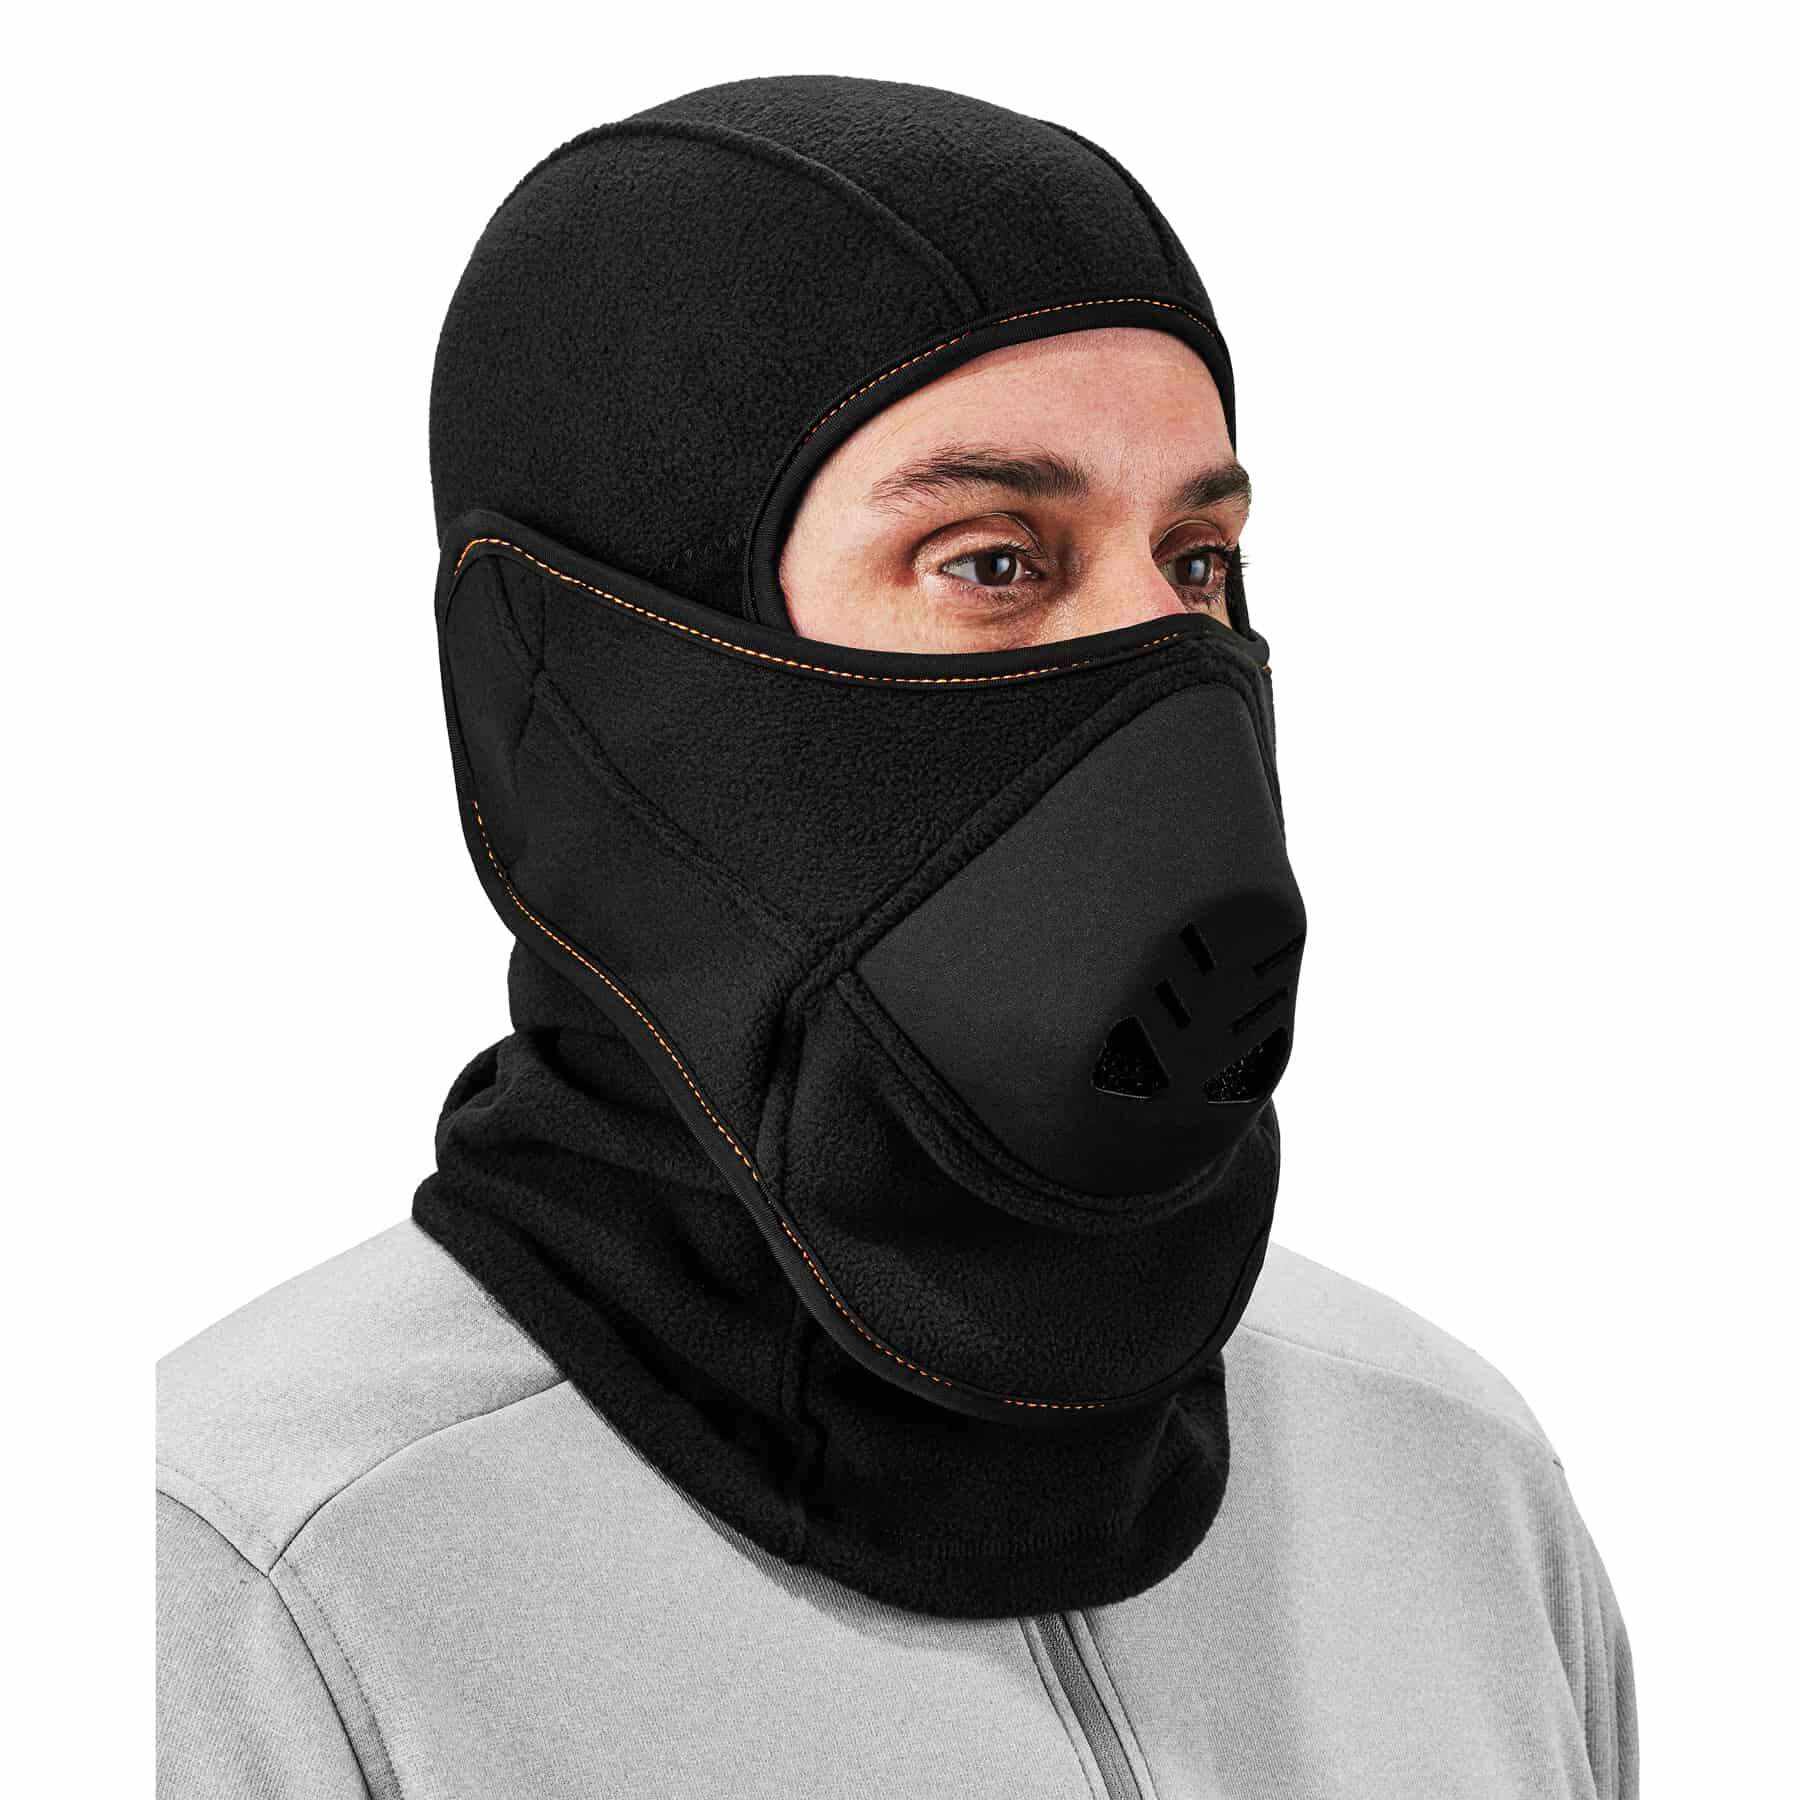 Windproof Ski Mask Cold Weather Face Mask Thermal Hood Hat Self Pro Balaclava 